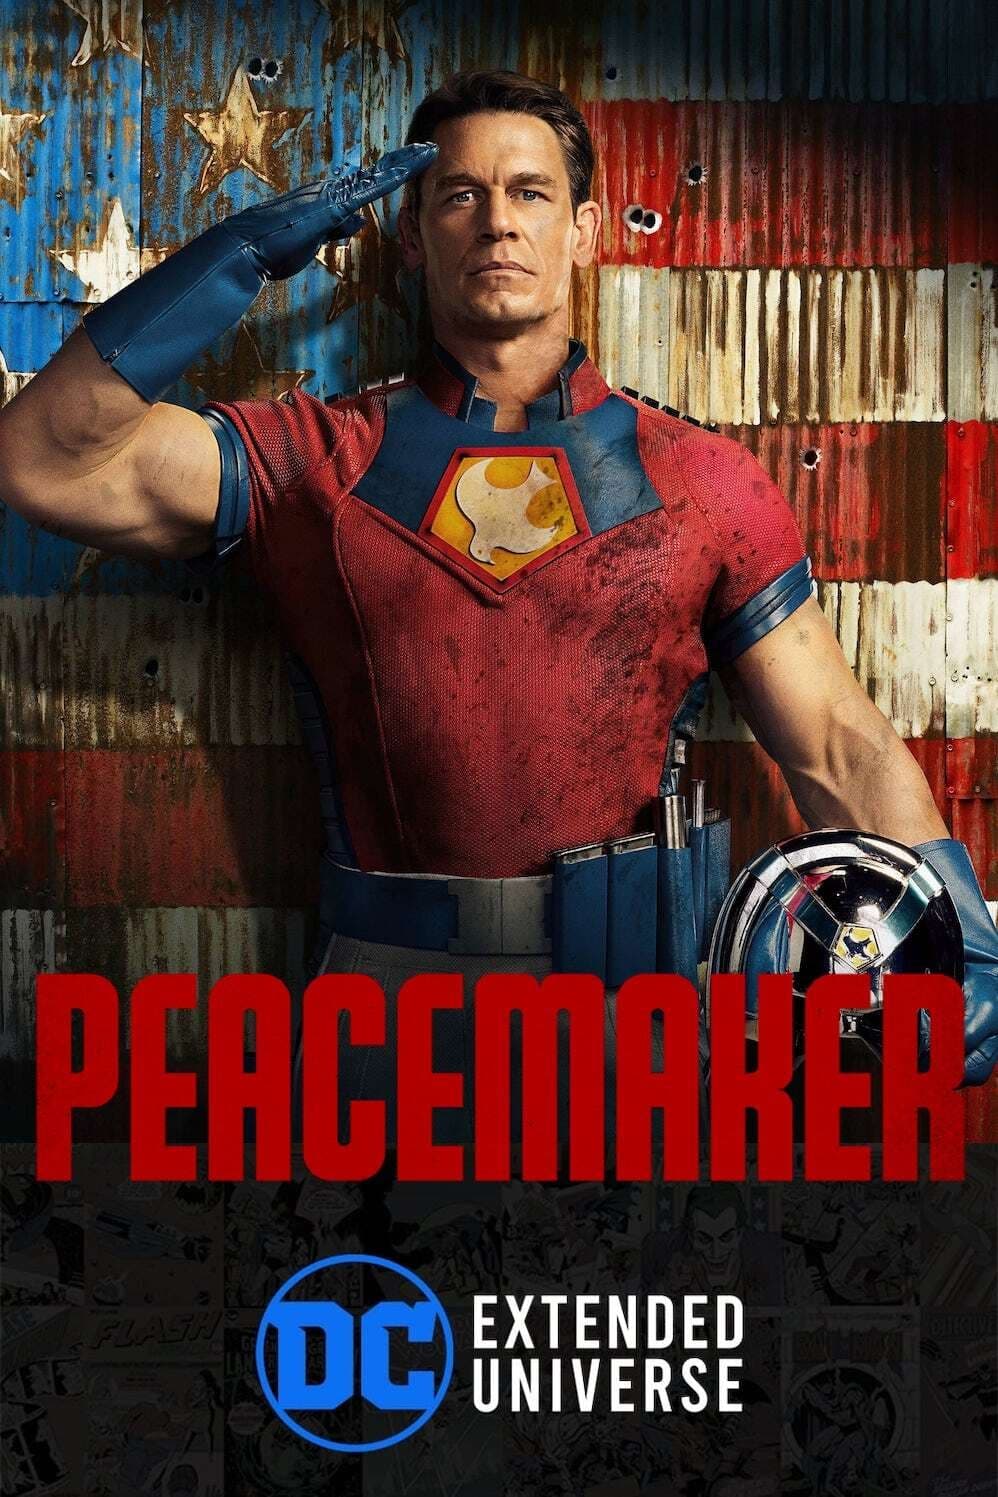 Plakát pro film “Peacemaker”